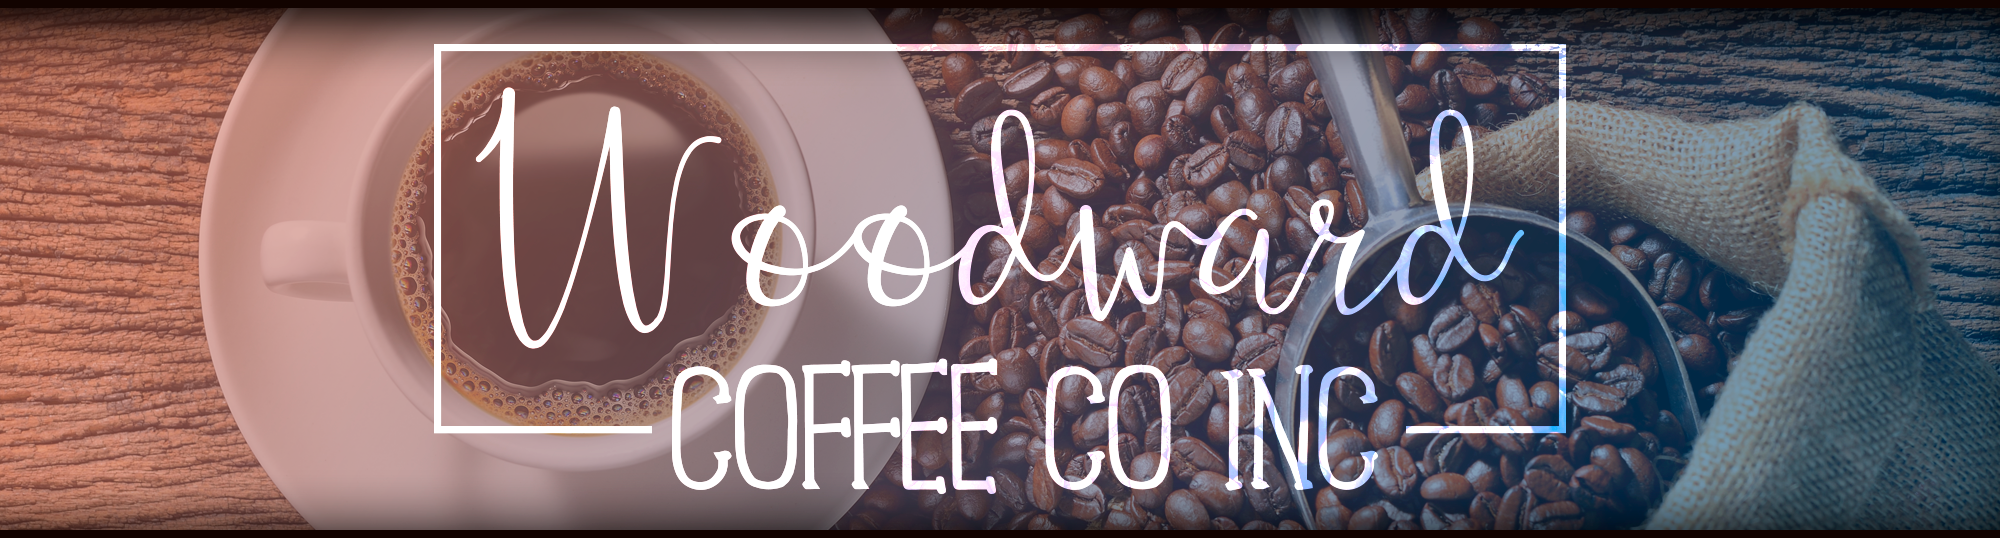 Woodward Coffee Co Inc